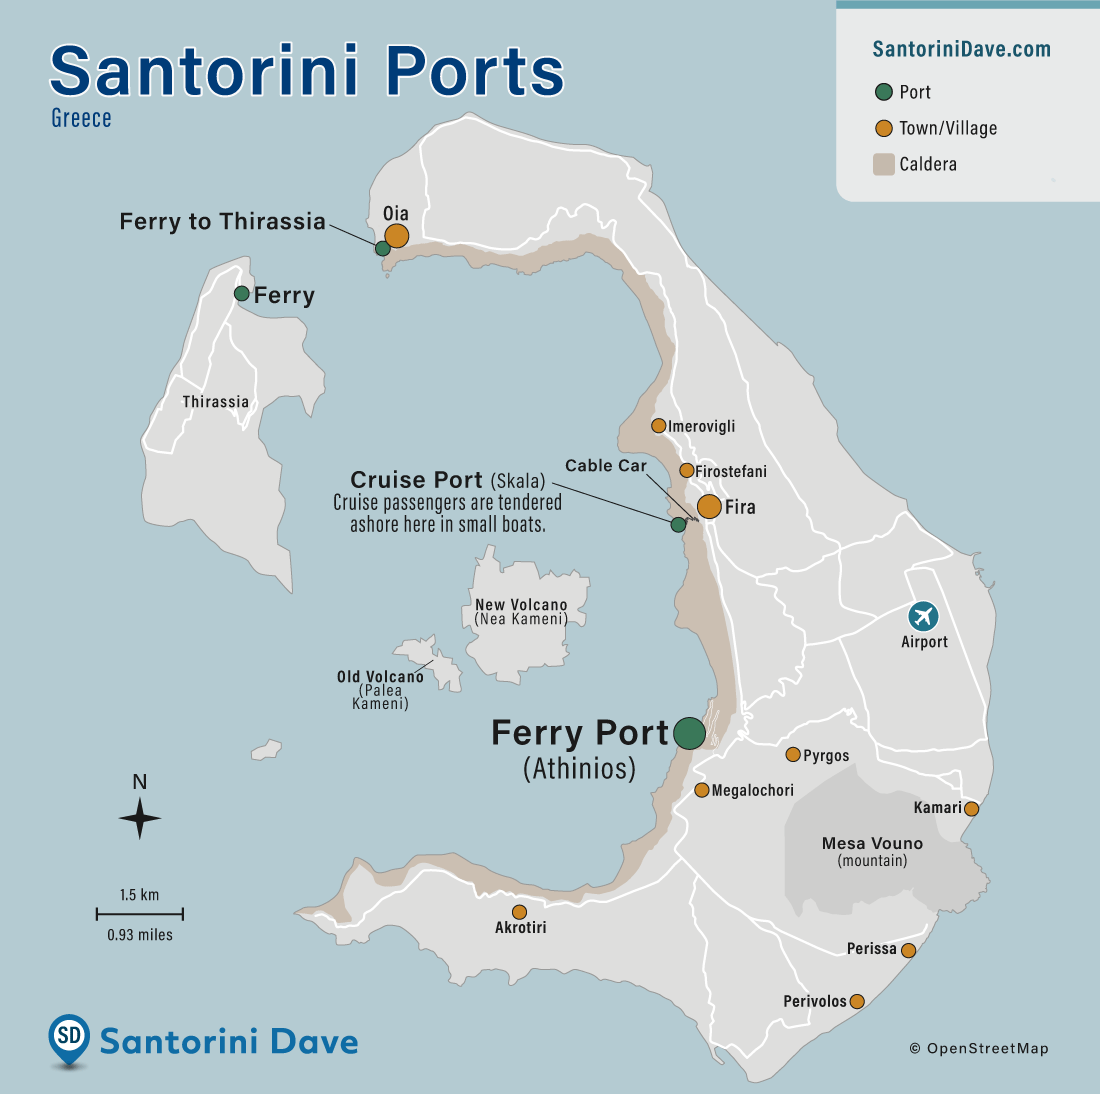 Port guide to Santorini